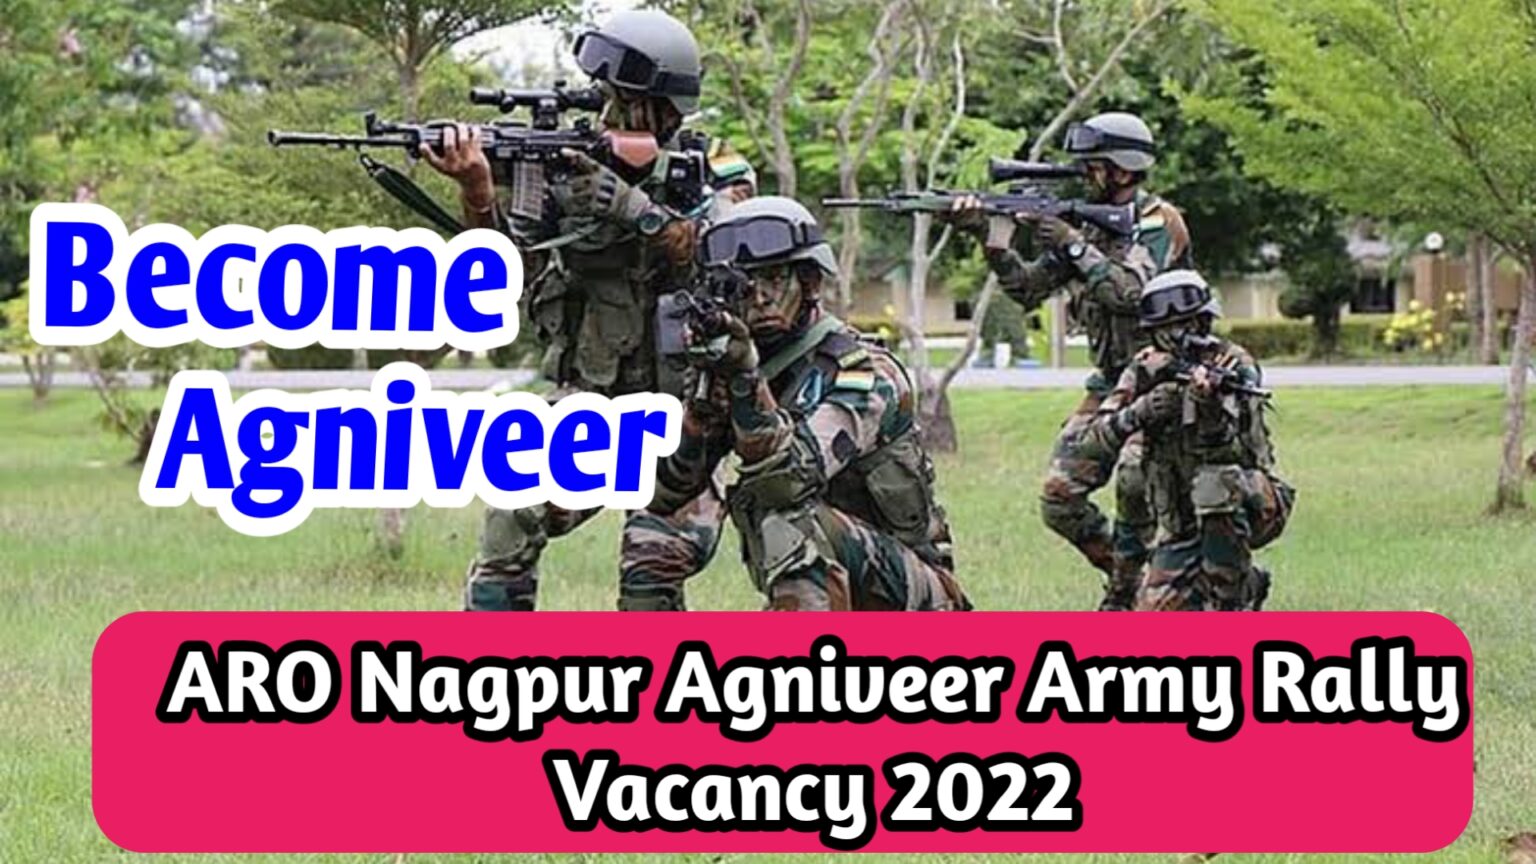 ARO Nagpur Agniveer Army Rally Vacancy